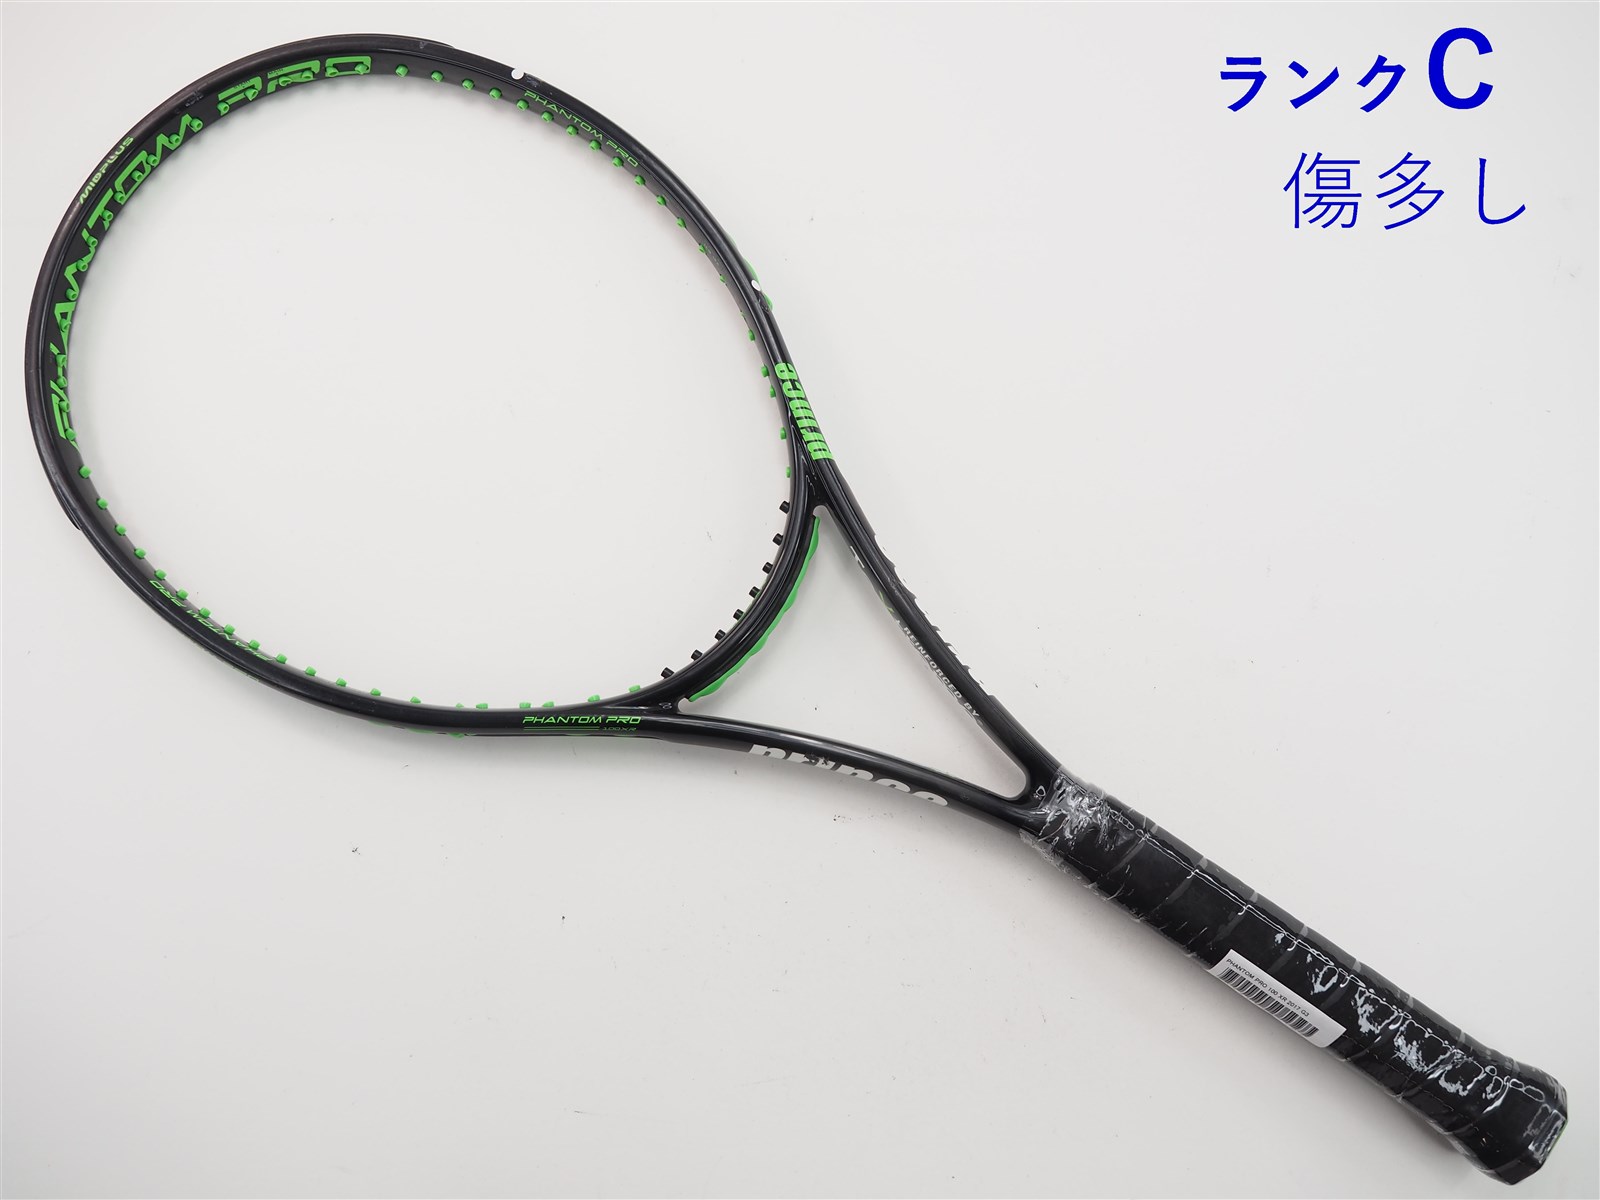 Prince (プリンス) フレームのみ 硬式テニス ラケット ファントム 100XR 7TJ024 3